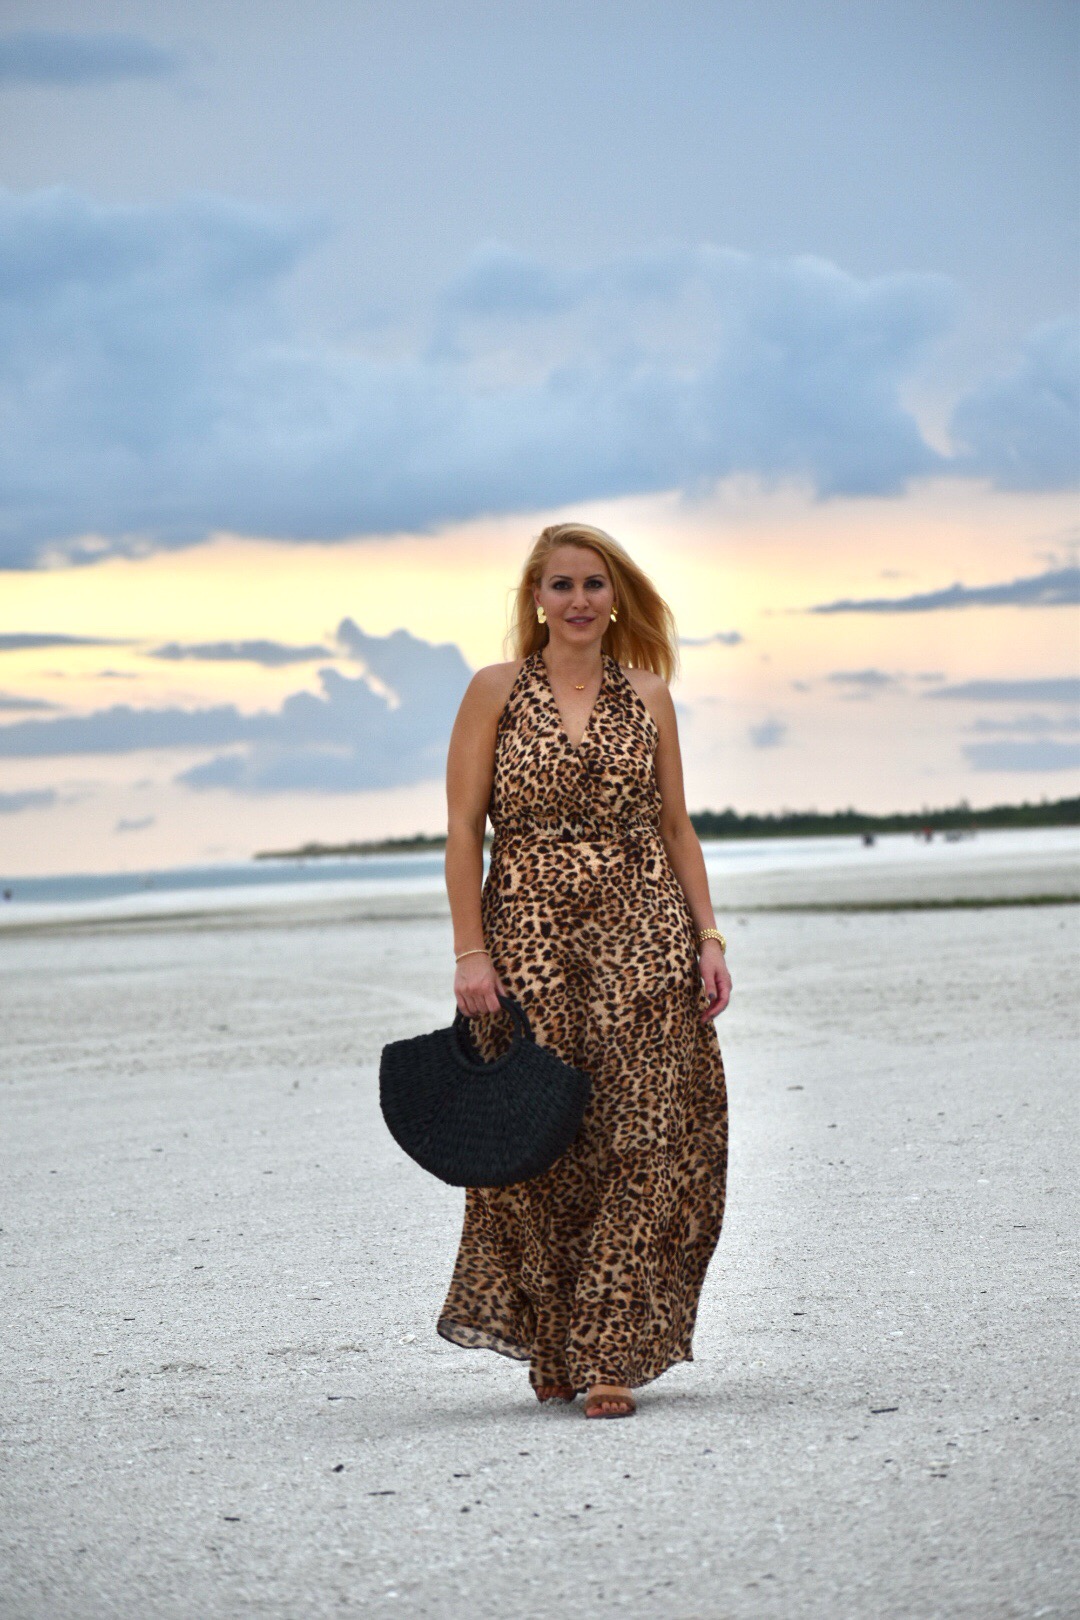 Leopard Outfit, Leopard Dress, Chetta B Leopard Print Dress, Gorjana Jewelry and Black Straw Tote in Marco Island Florida